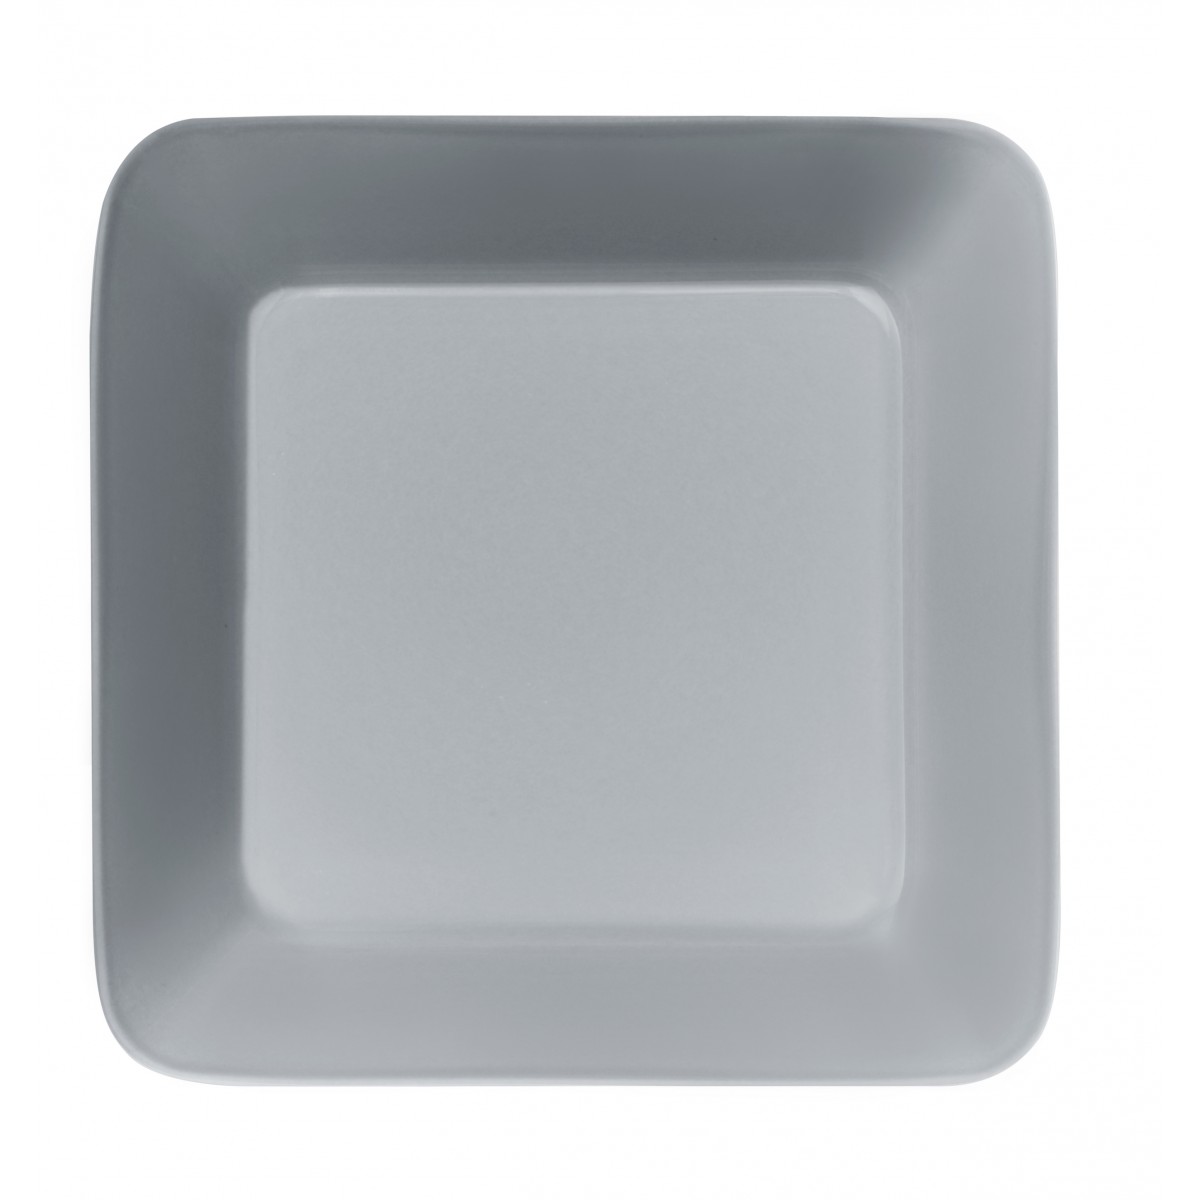 16x16cm - Teema square plate - pearl grey - 1005889